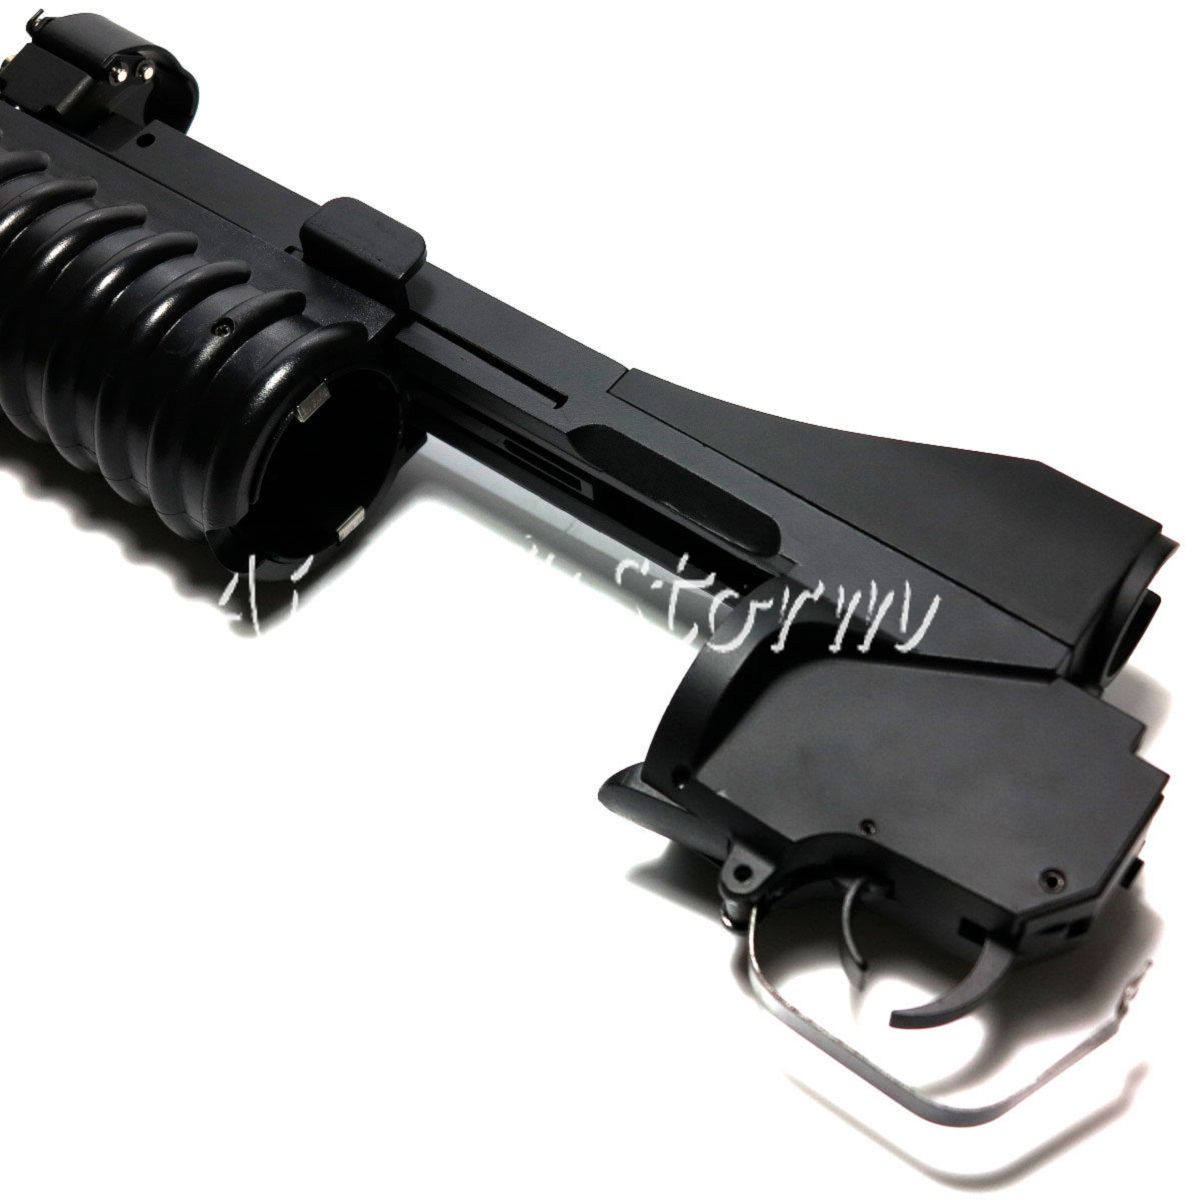 Shooting Gear E&C 3in1 M203 Gas Powered 40mm Grenade Launcher (Short)